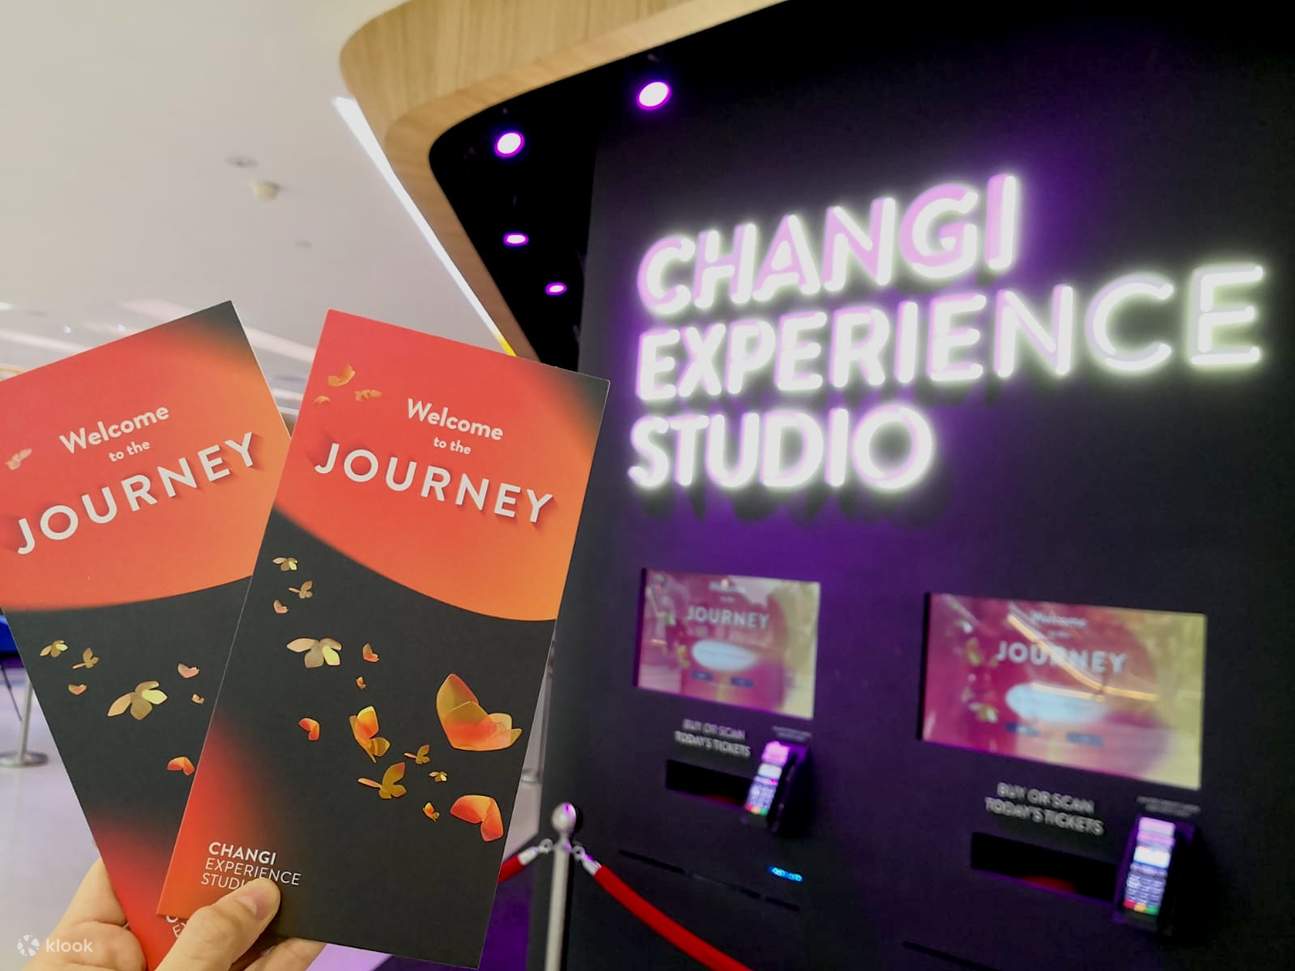 Changi Experience Studio